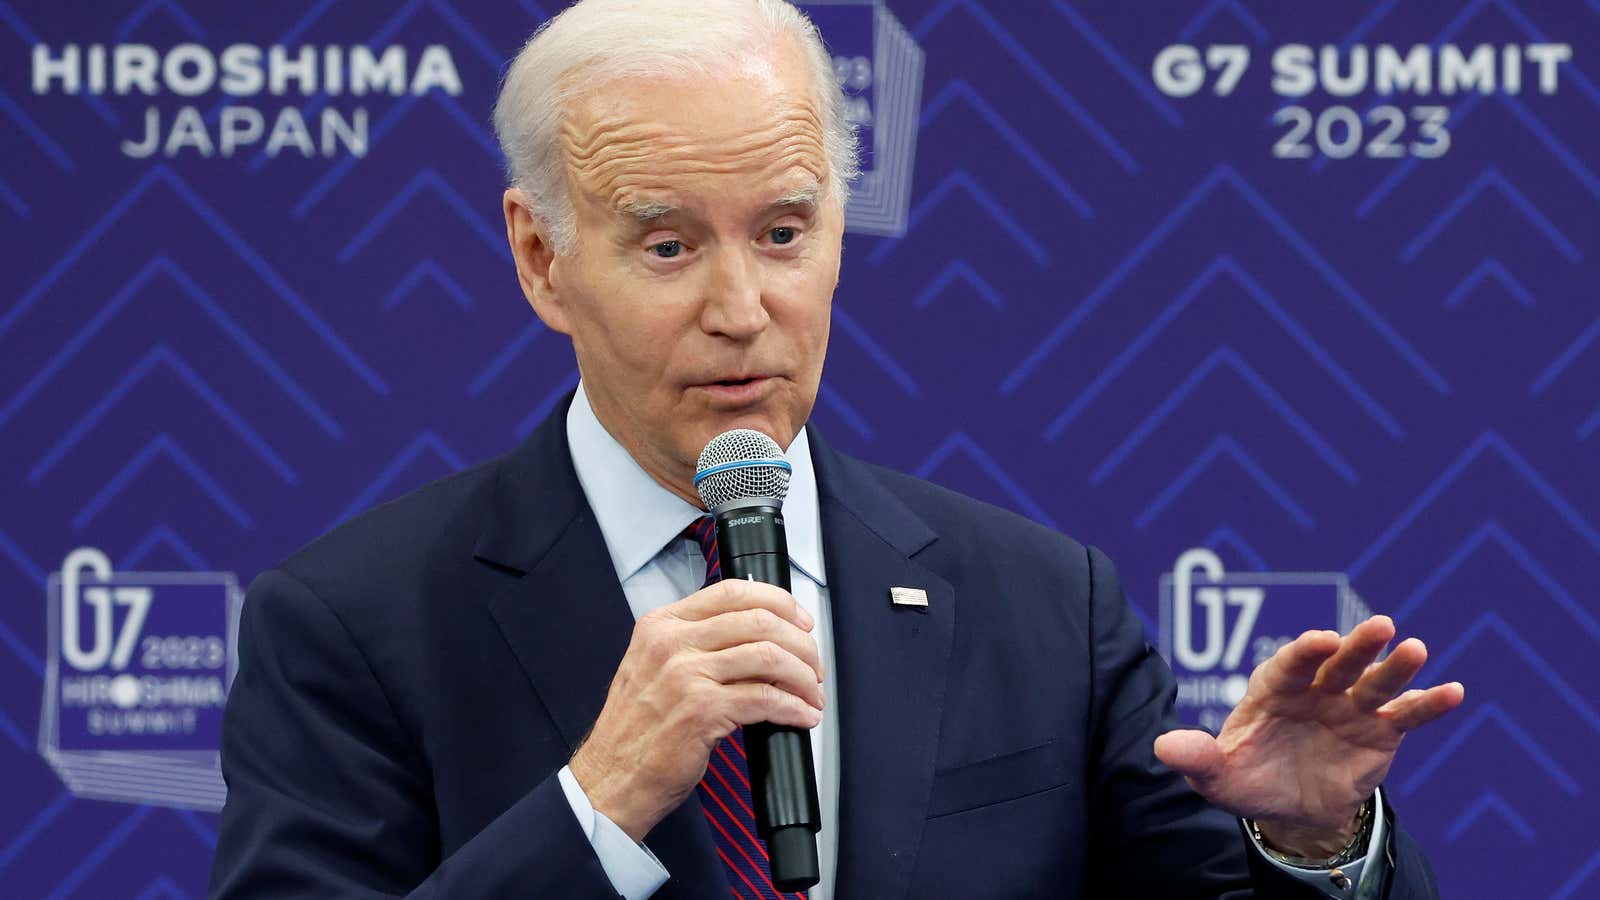 Joe Biden addresses debt ceiling questions at the G7 Summit